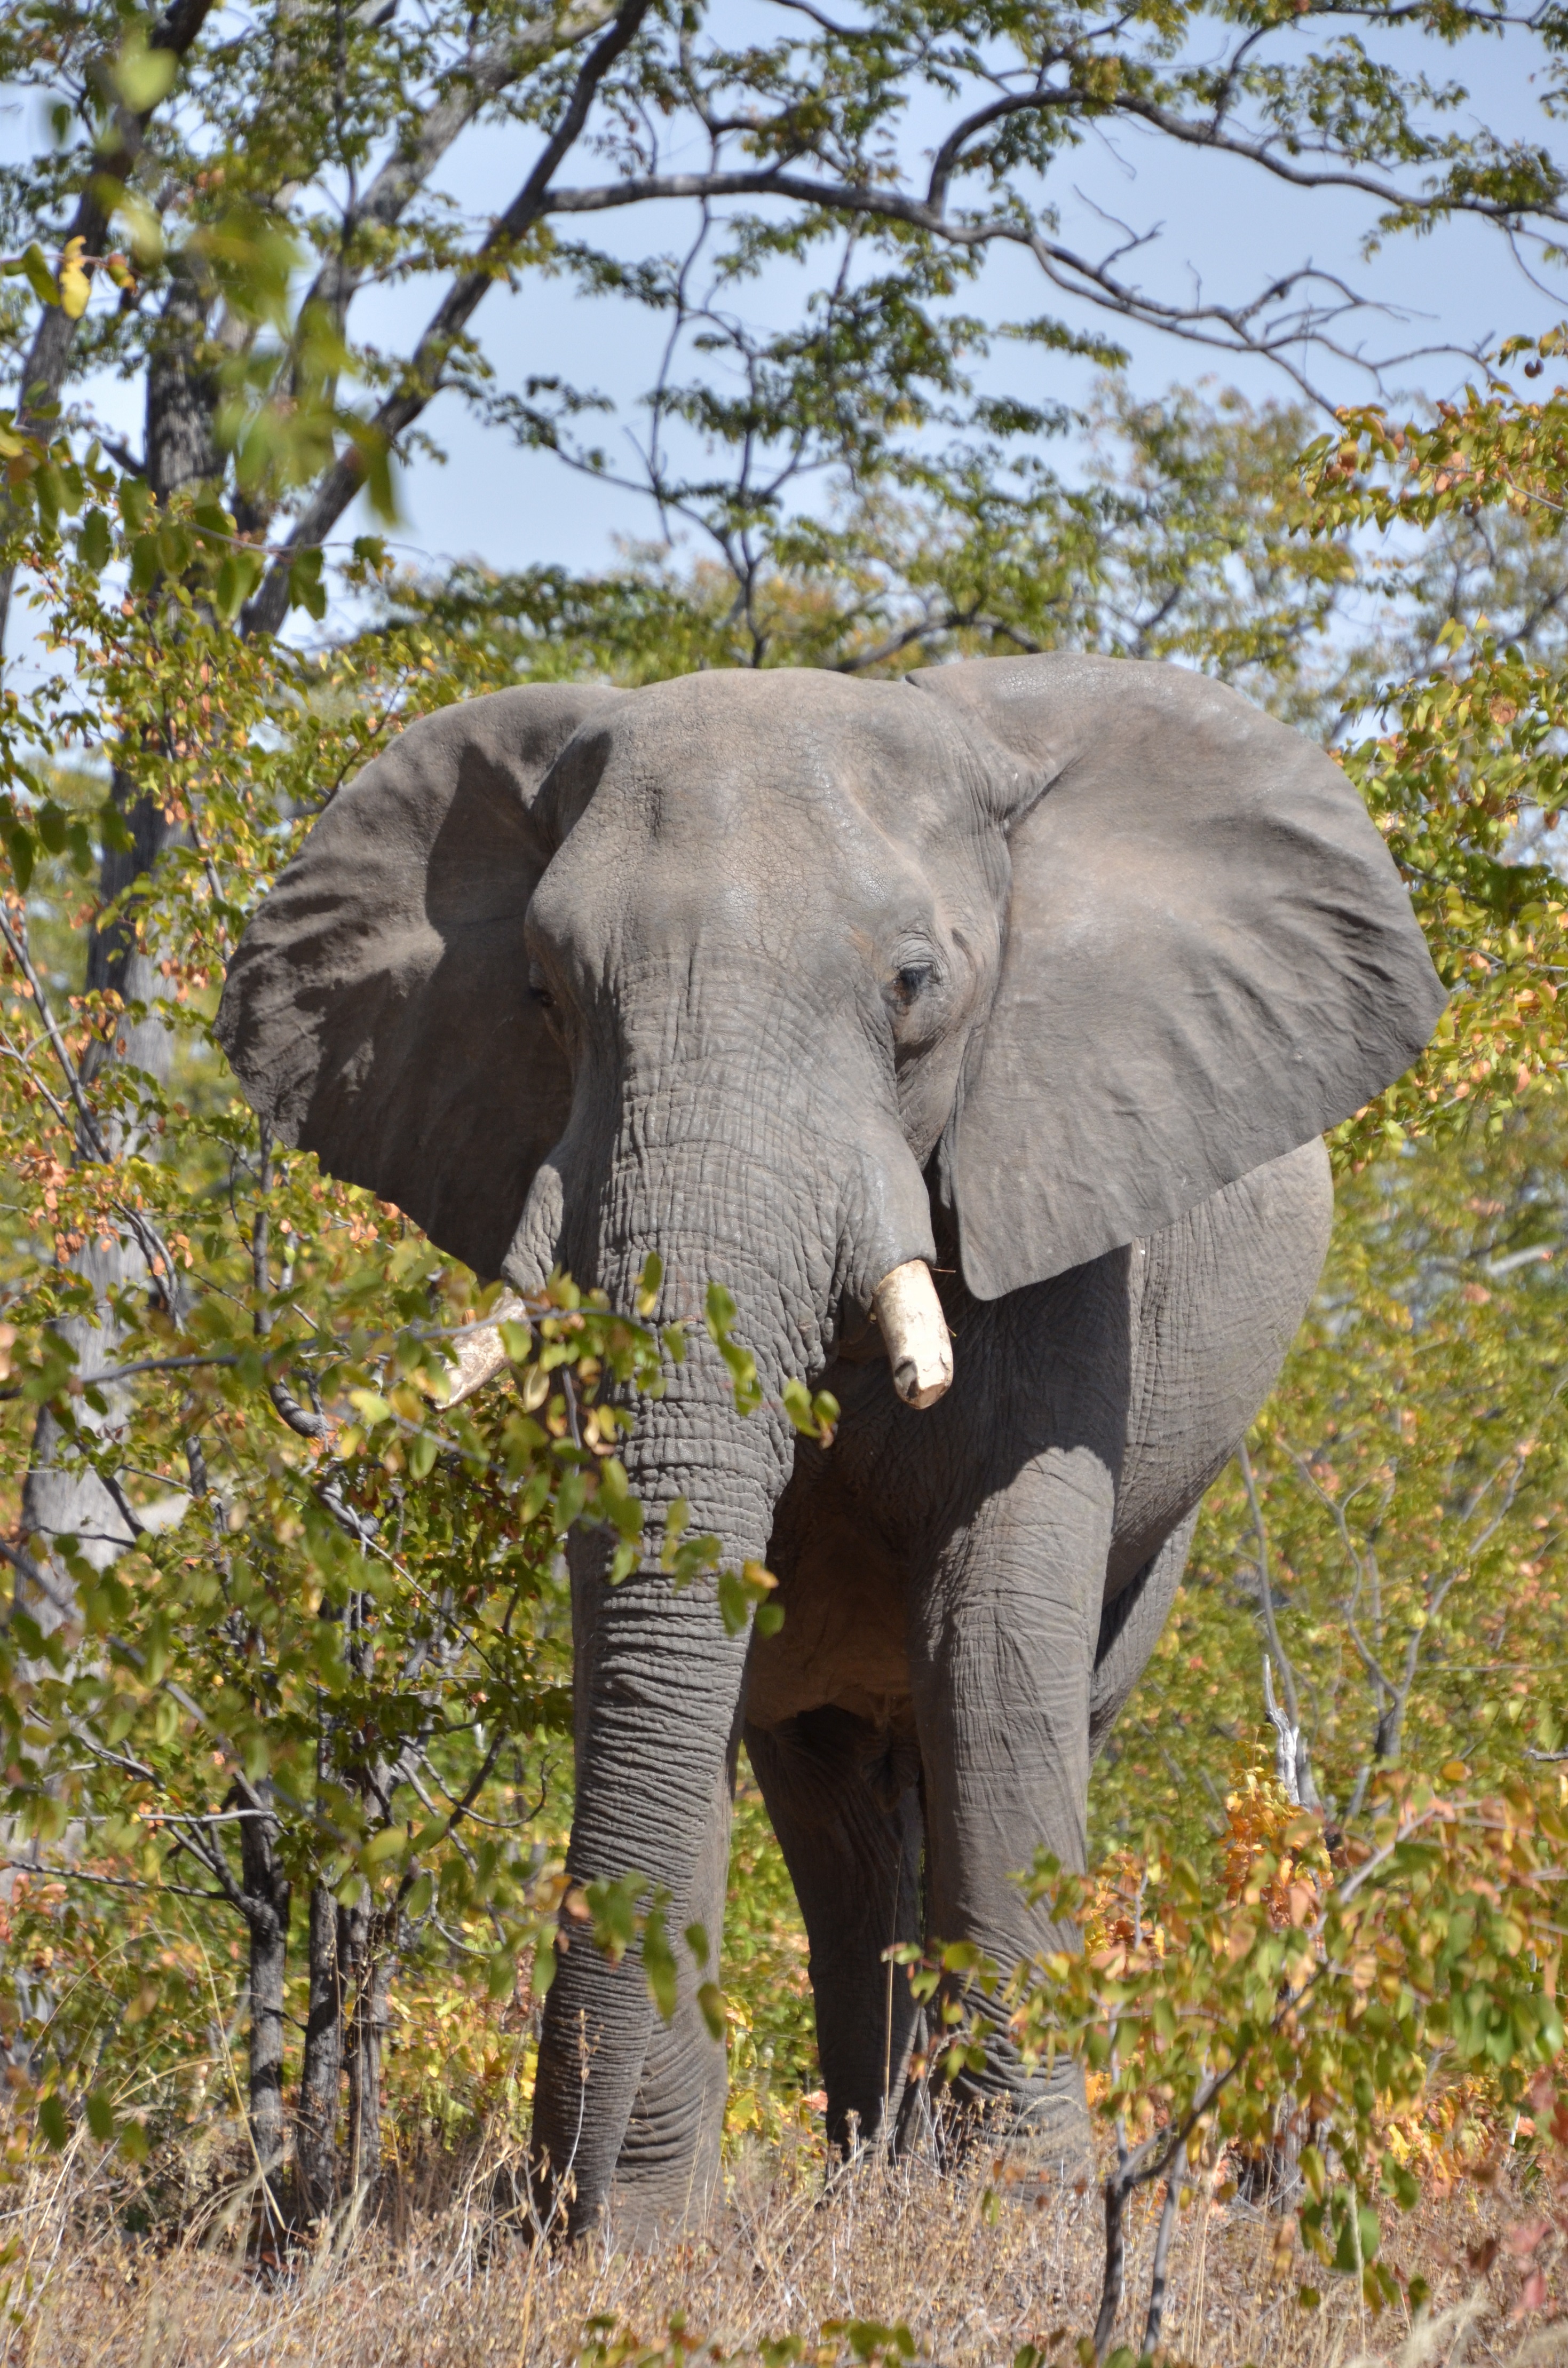 A close up of the elephant.